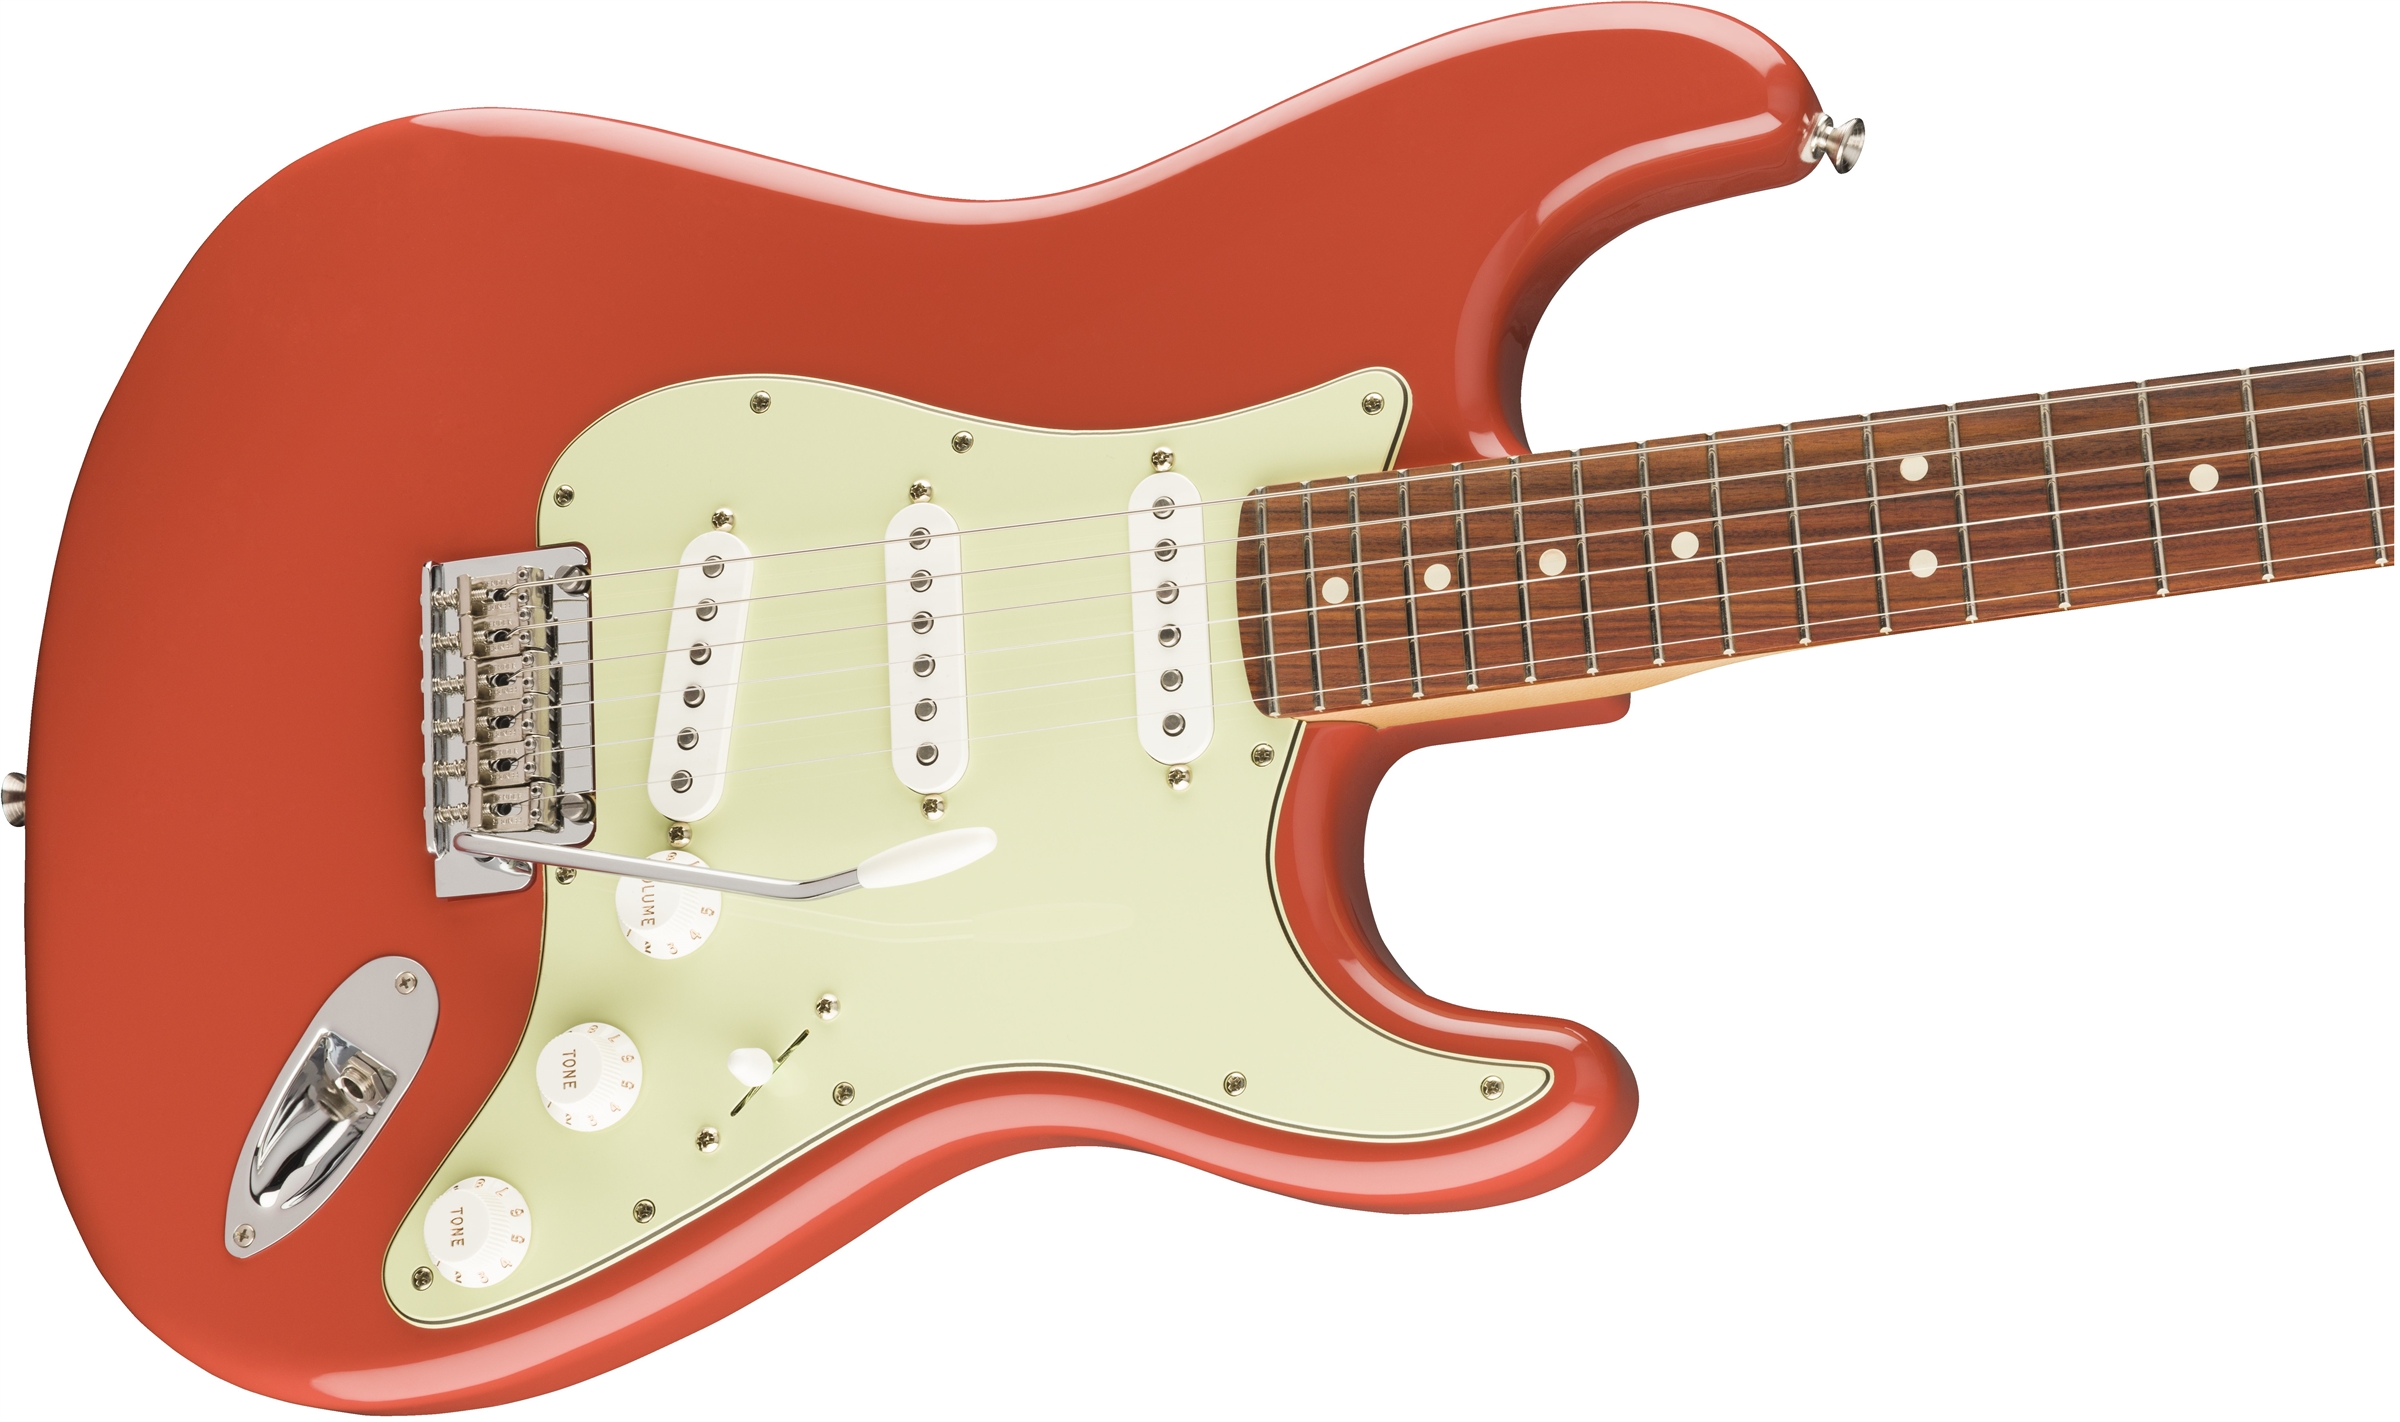 Fender Strat Player Ltd Mex 3s Trem Pf - Fiesta Red - Guitarra eléctrica con forma de str. - Variation 3